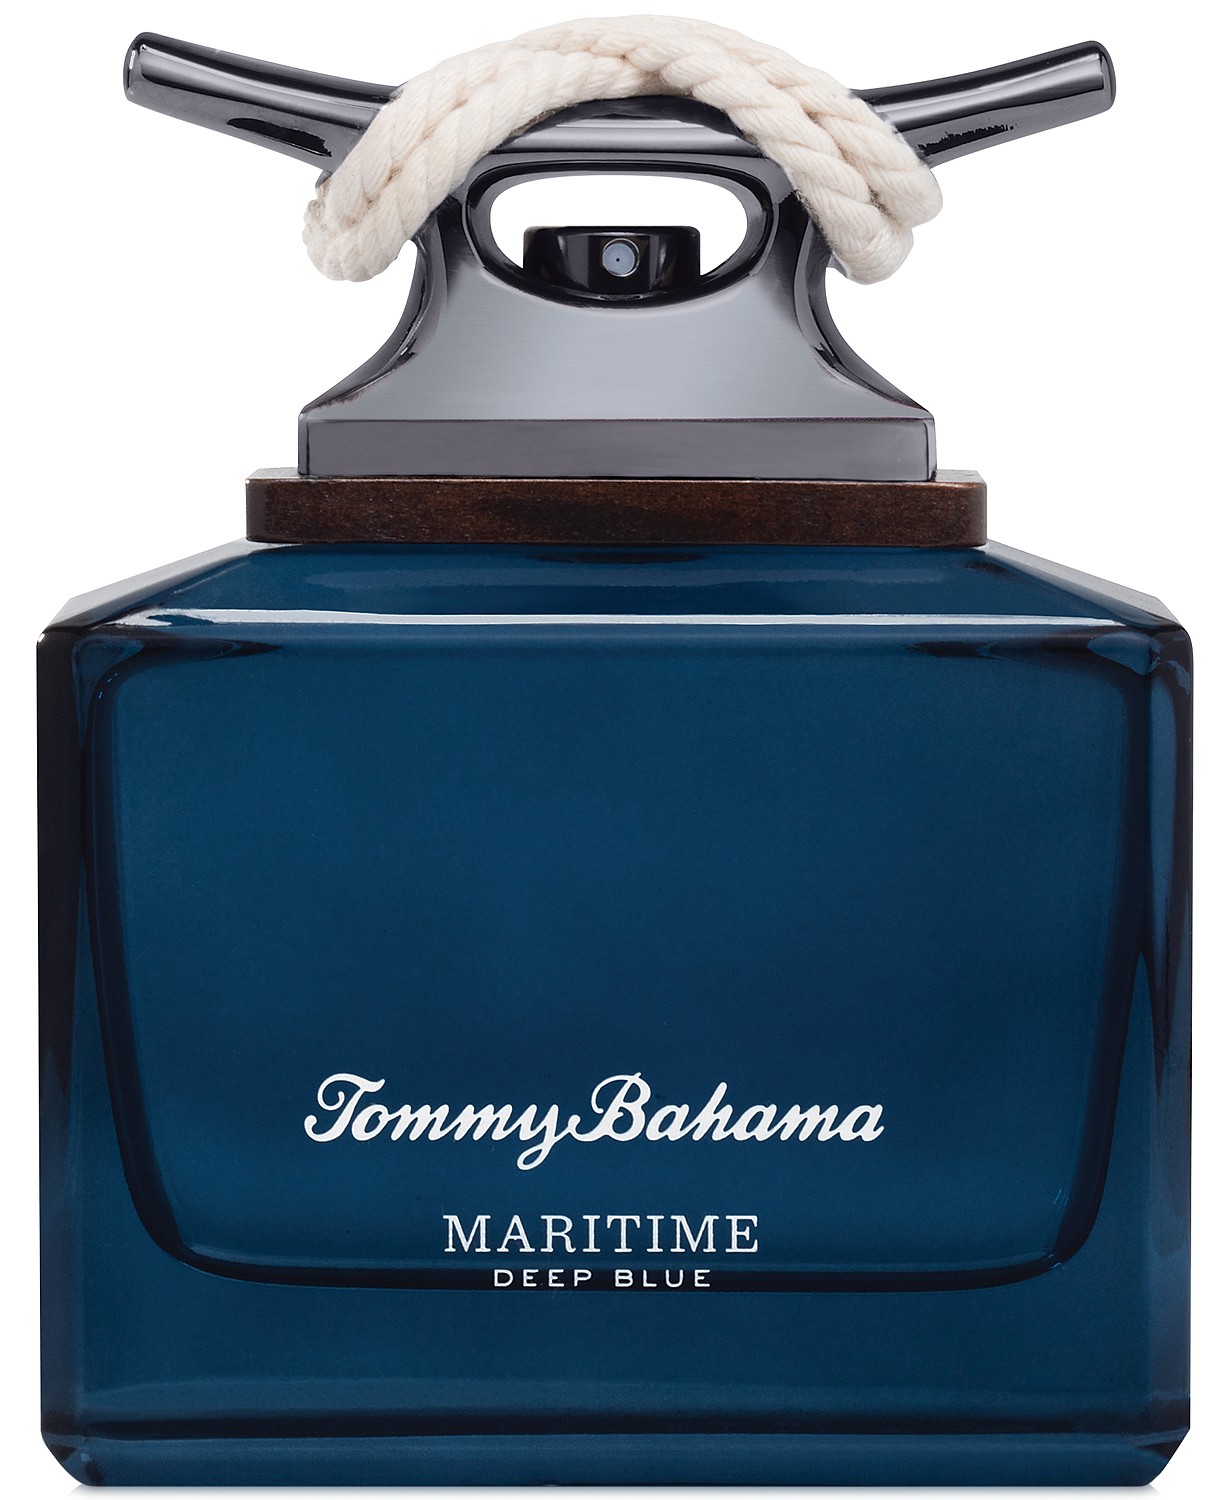 Maritime Deep Blue Tommy Bahama cologne - a fragrance for men 2018